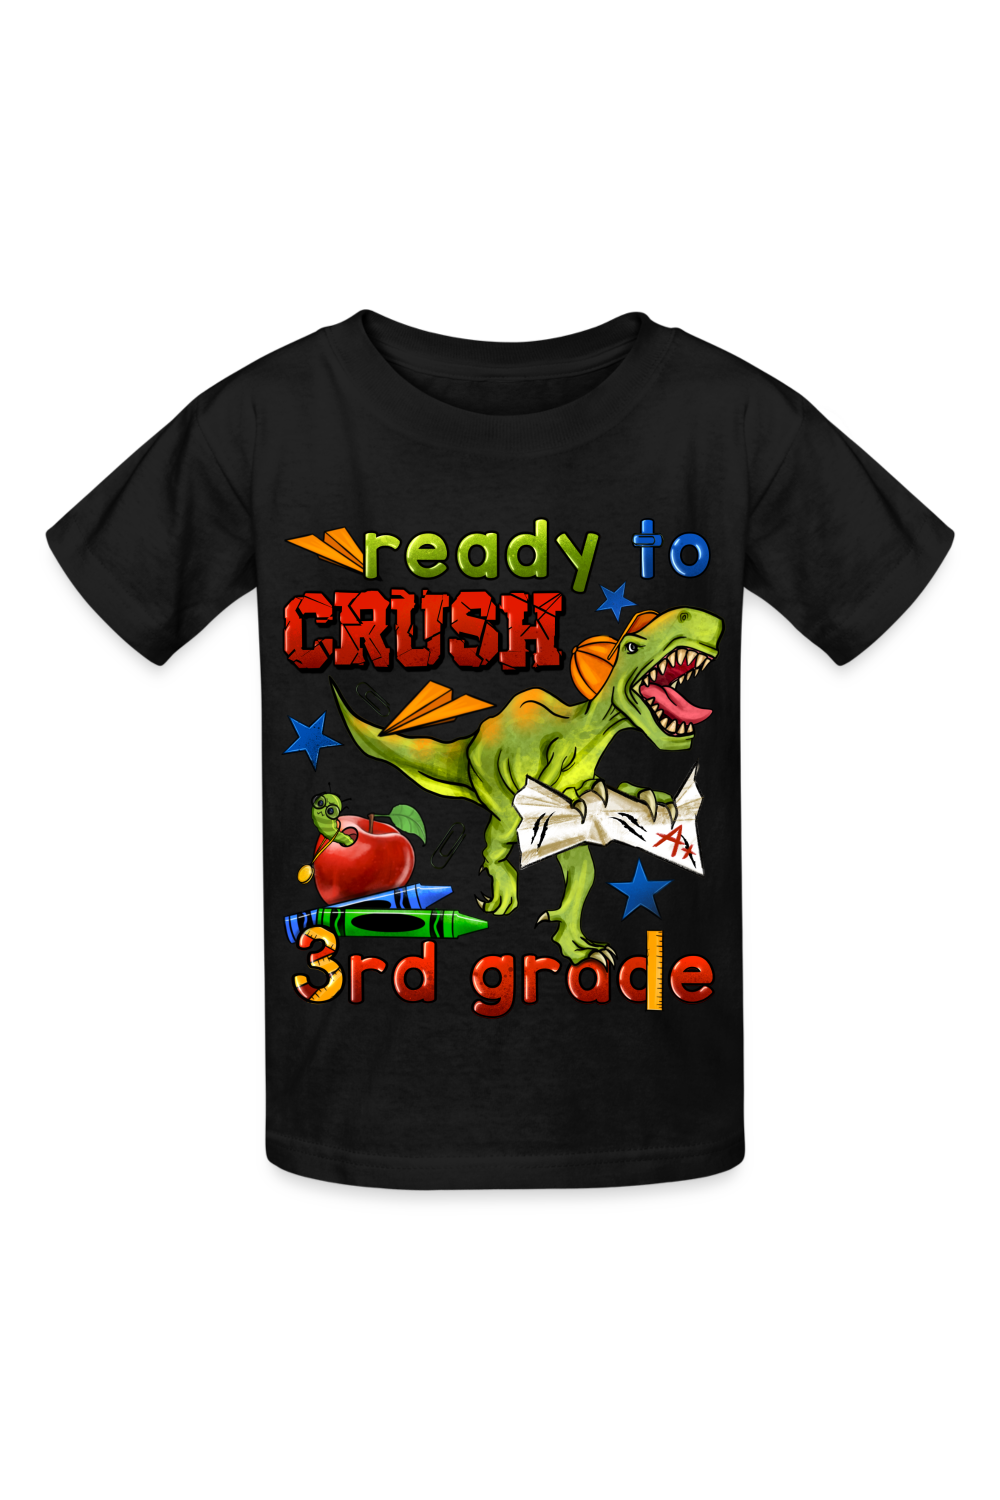 Boys Ready To Crush Third Grade Short Sleeve Tee Shirts for Back To School - black - NicholesGifts.online